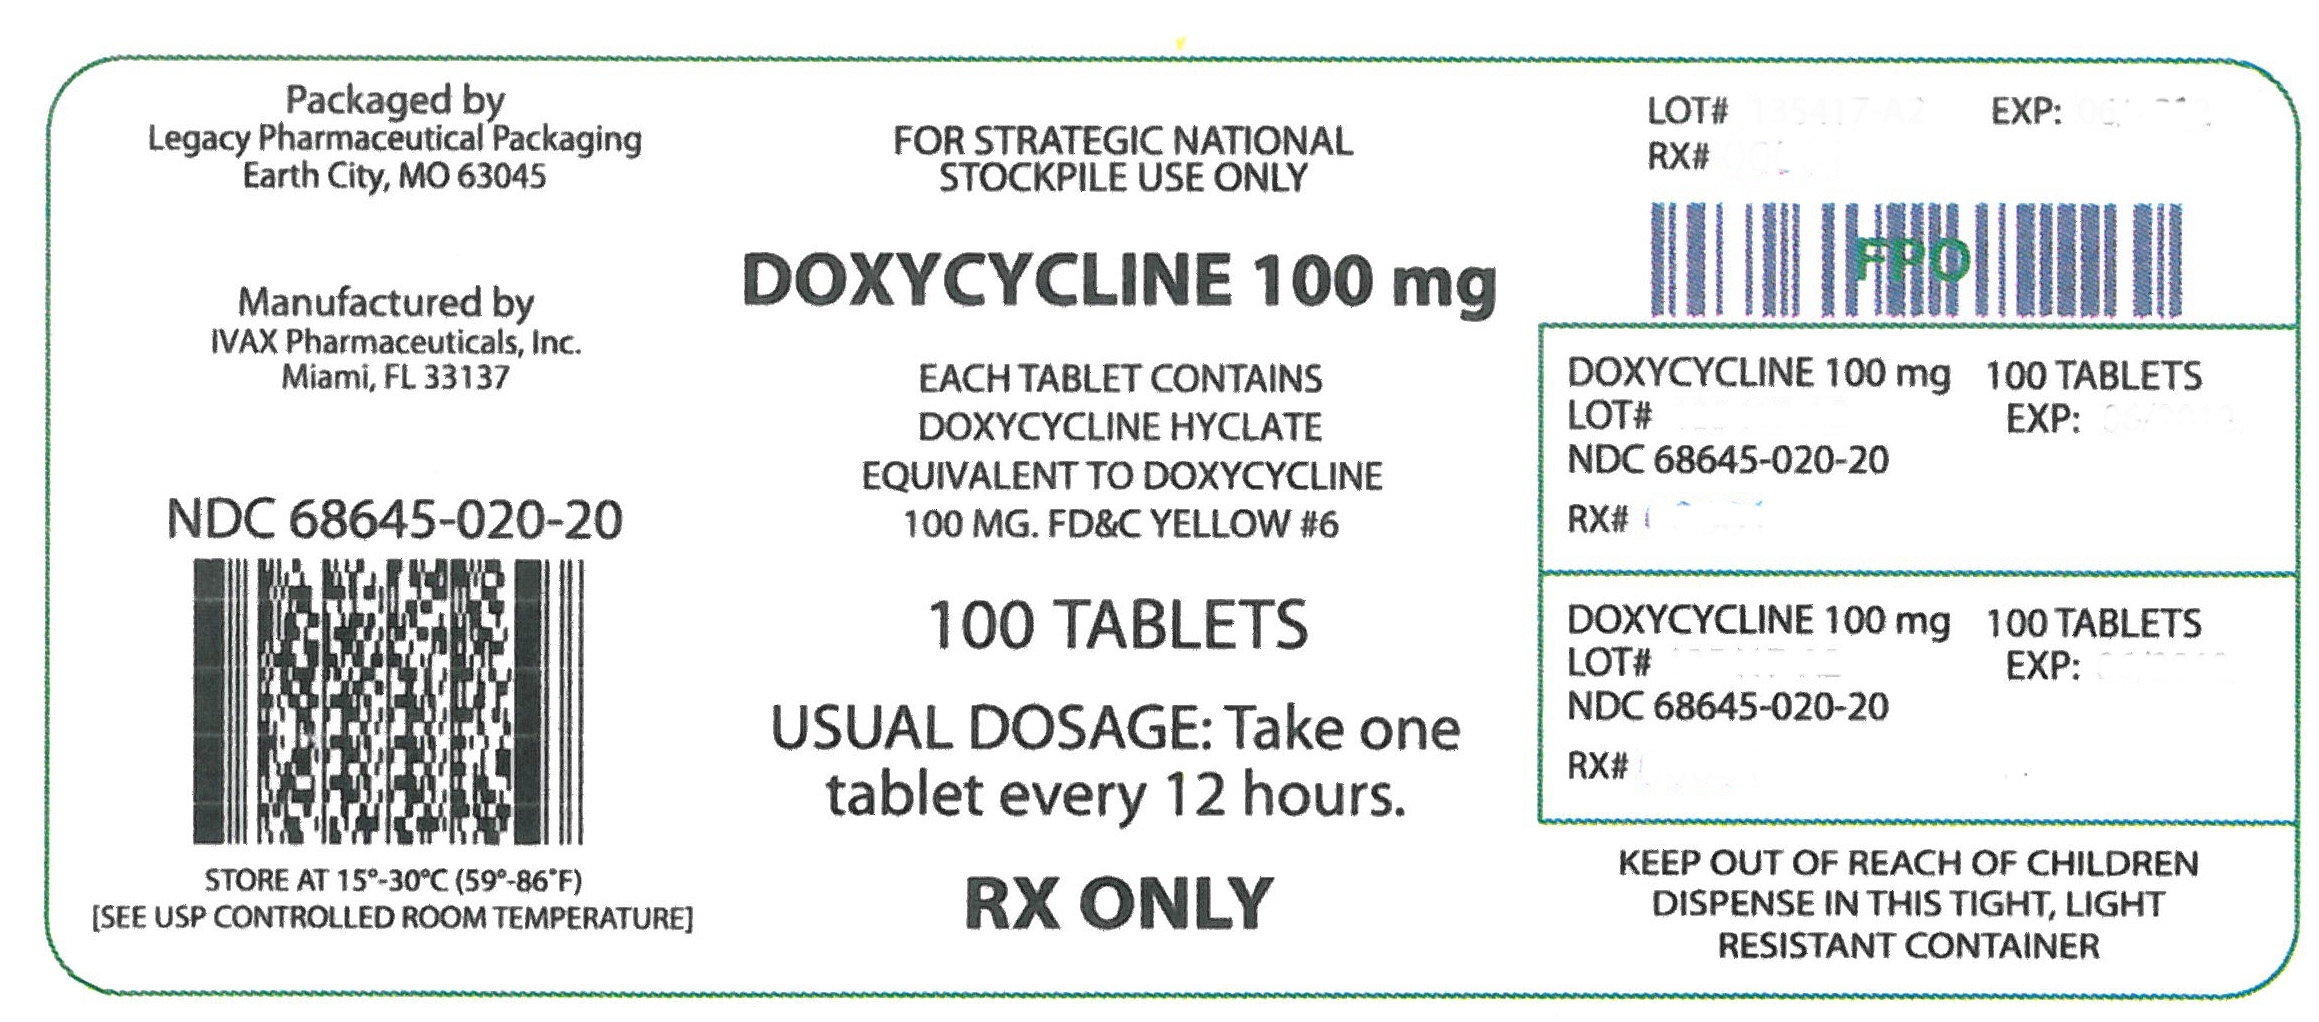 NDC: <a href=/NDC/68645-020-20>68645-020-20</a>

Doxycycline 100mg

100 tablets

Rx Only

